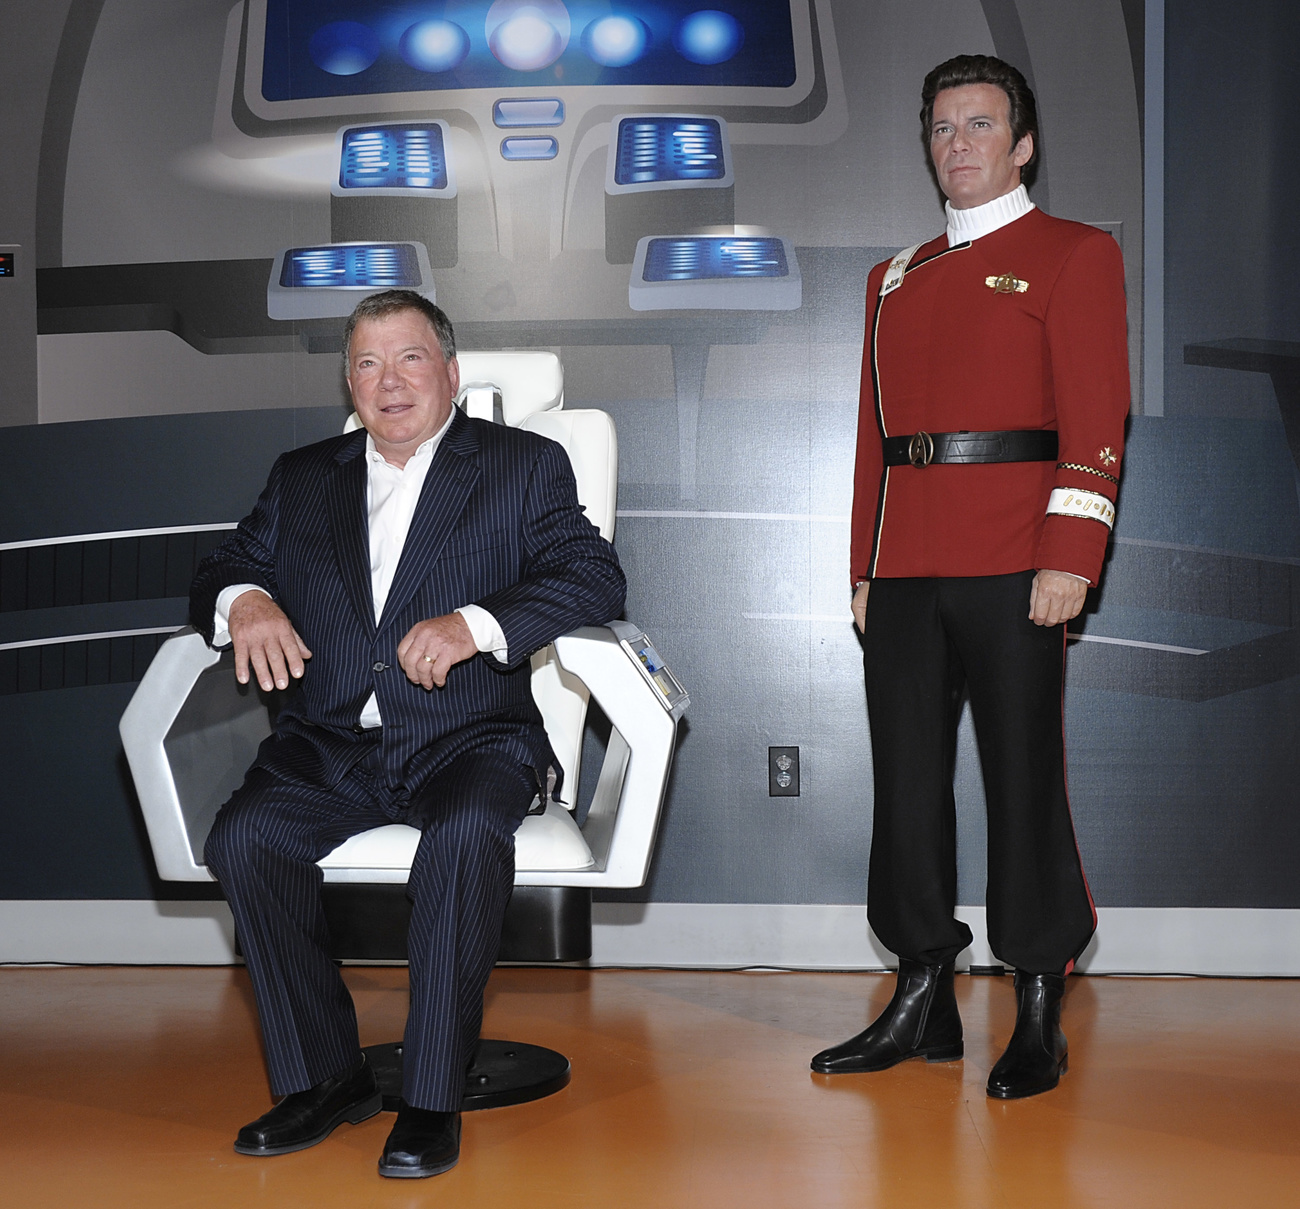 William Shatner sits beside a wax figure of himself as Captain Kirk